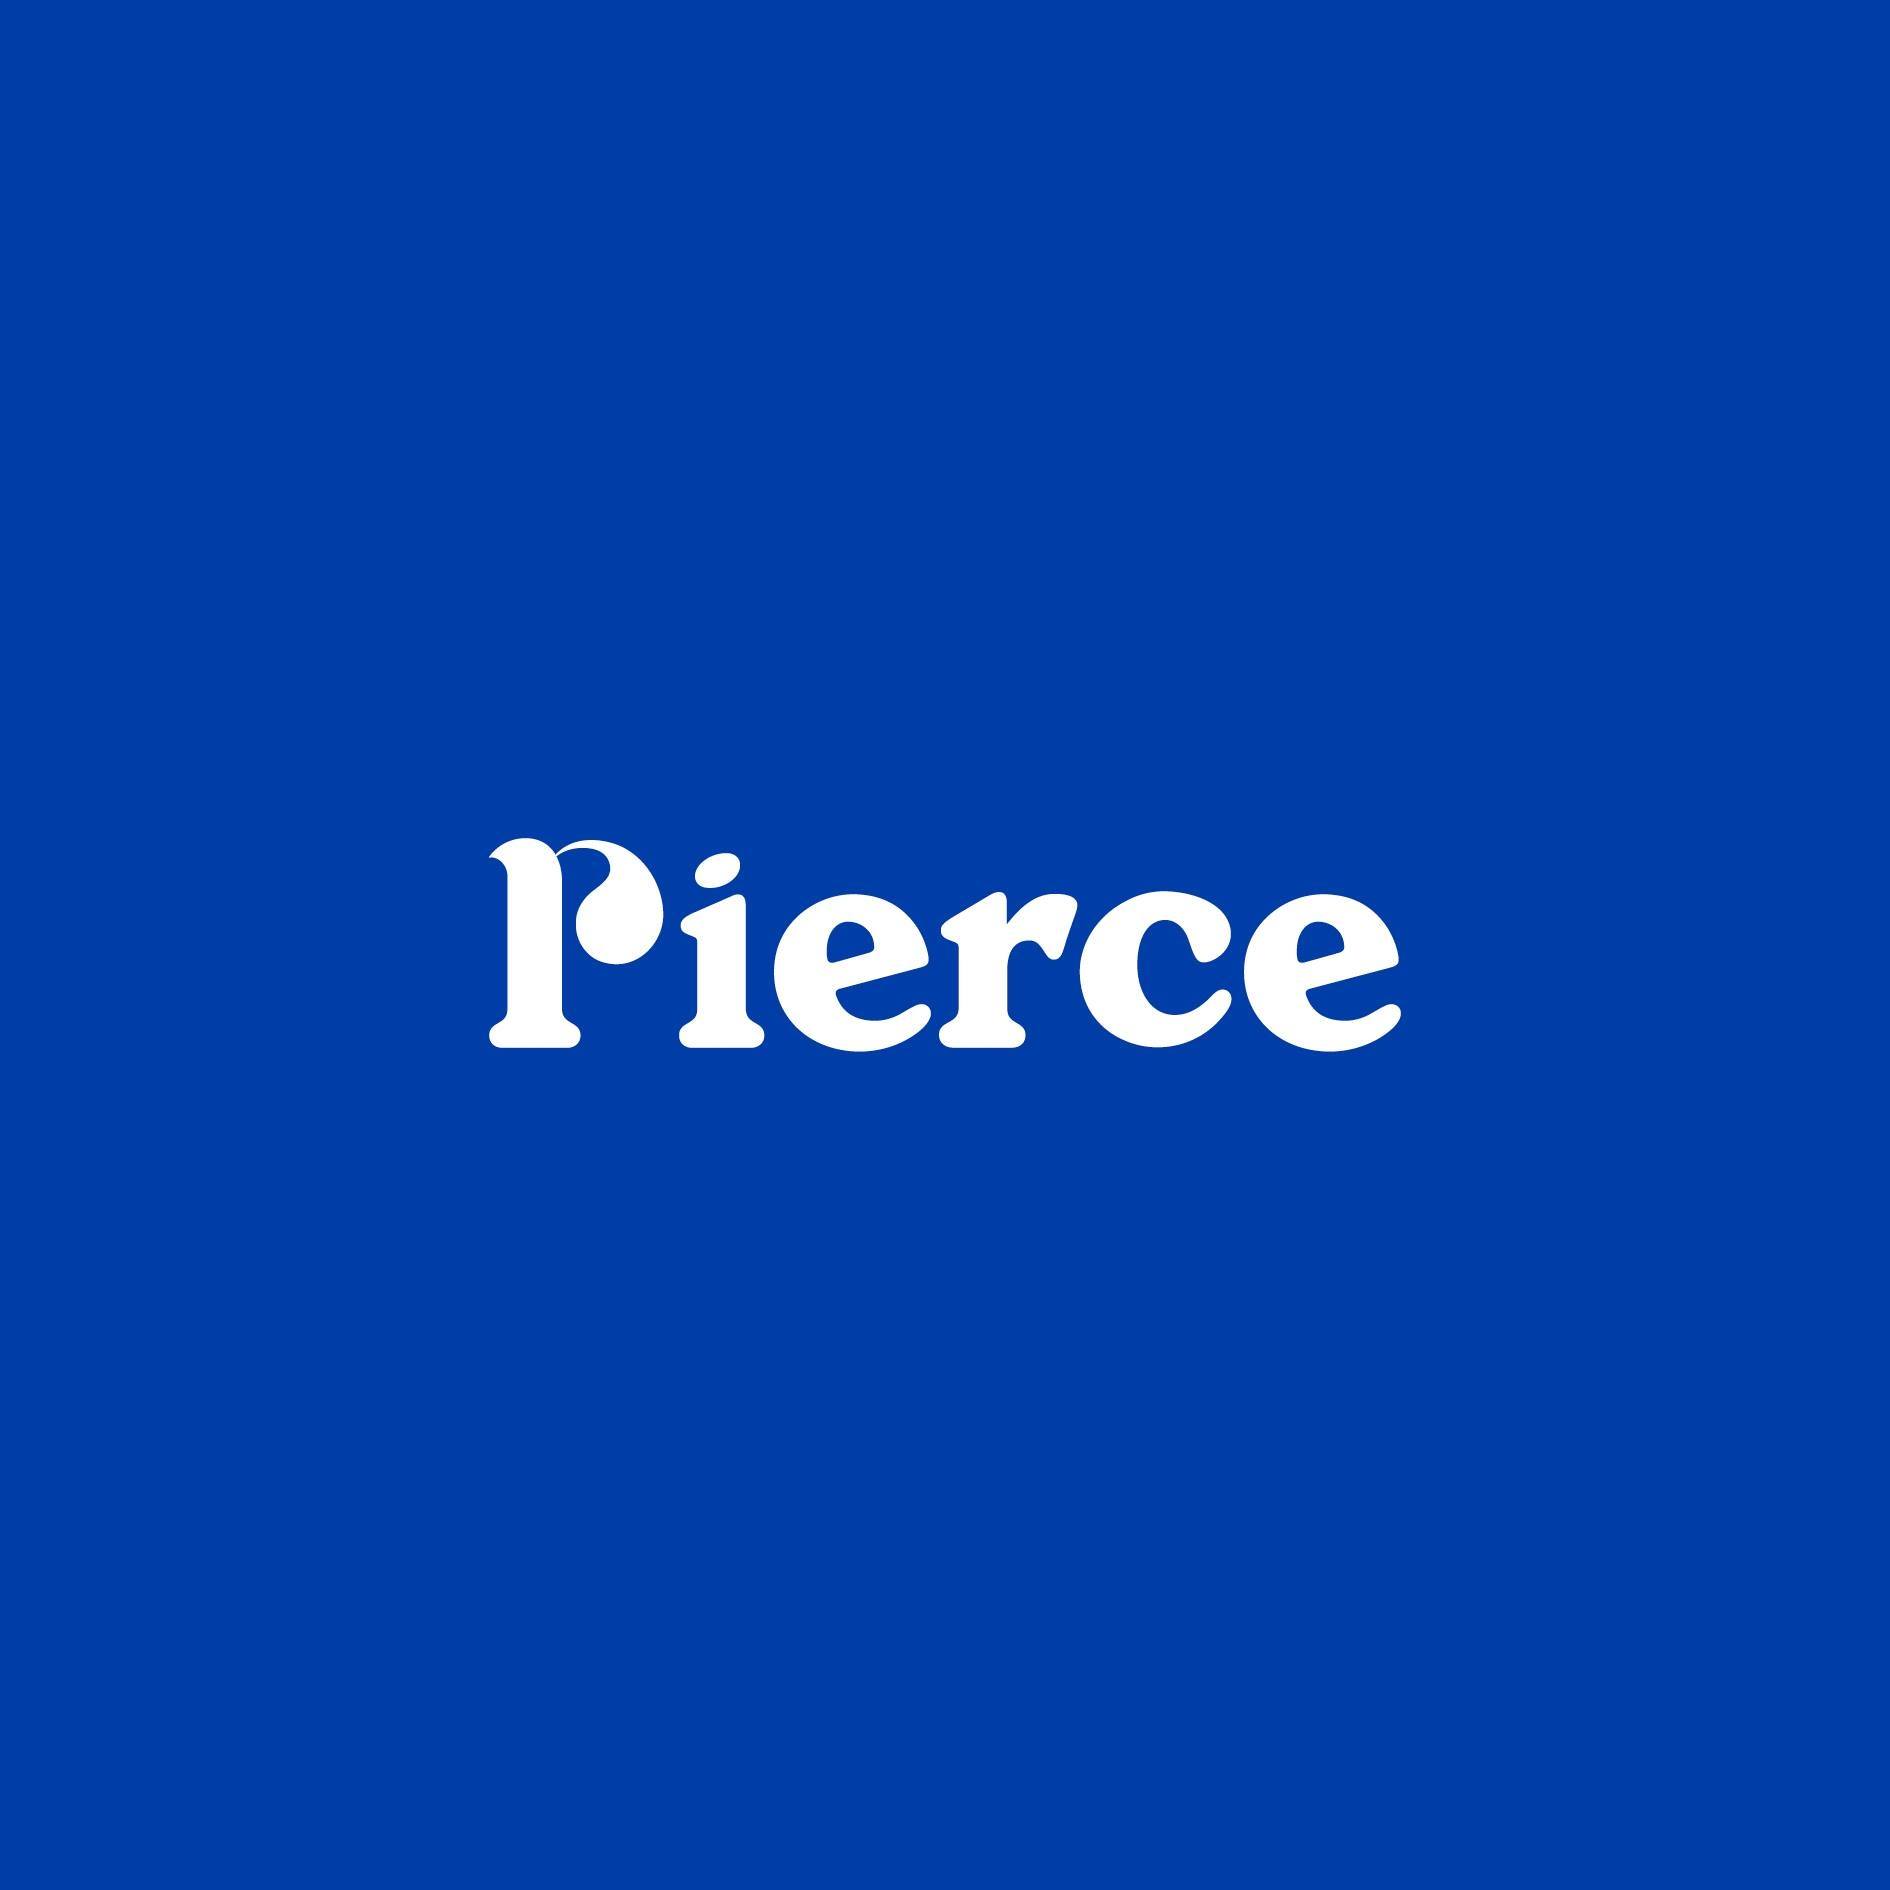 Business logo of Pierce Corporation